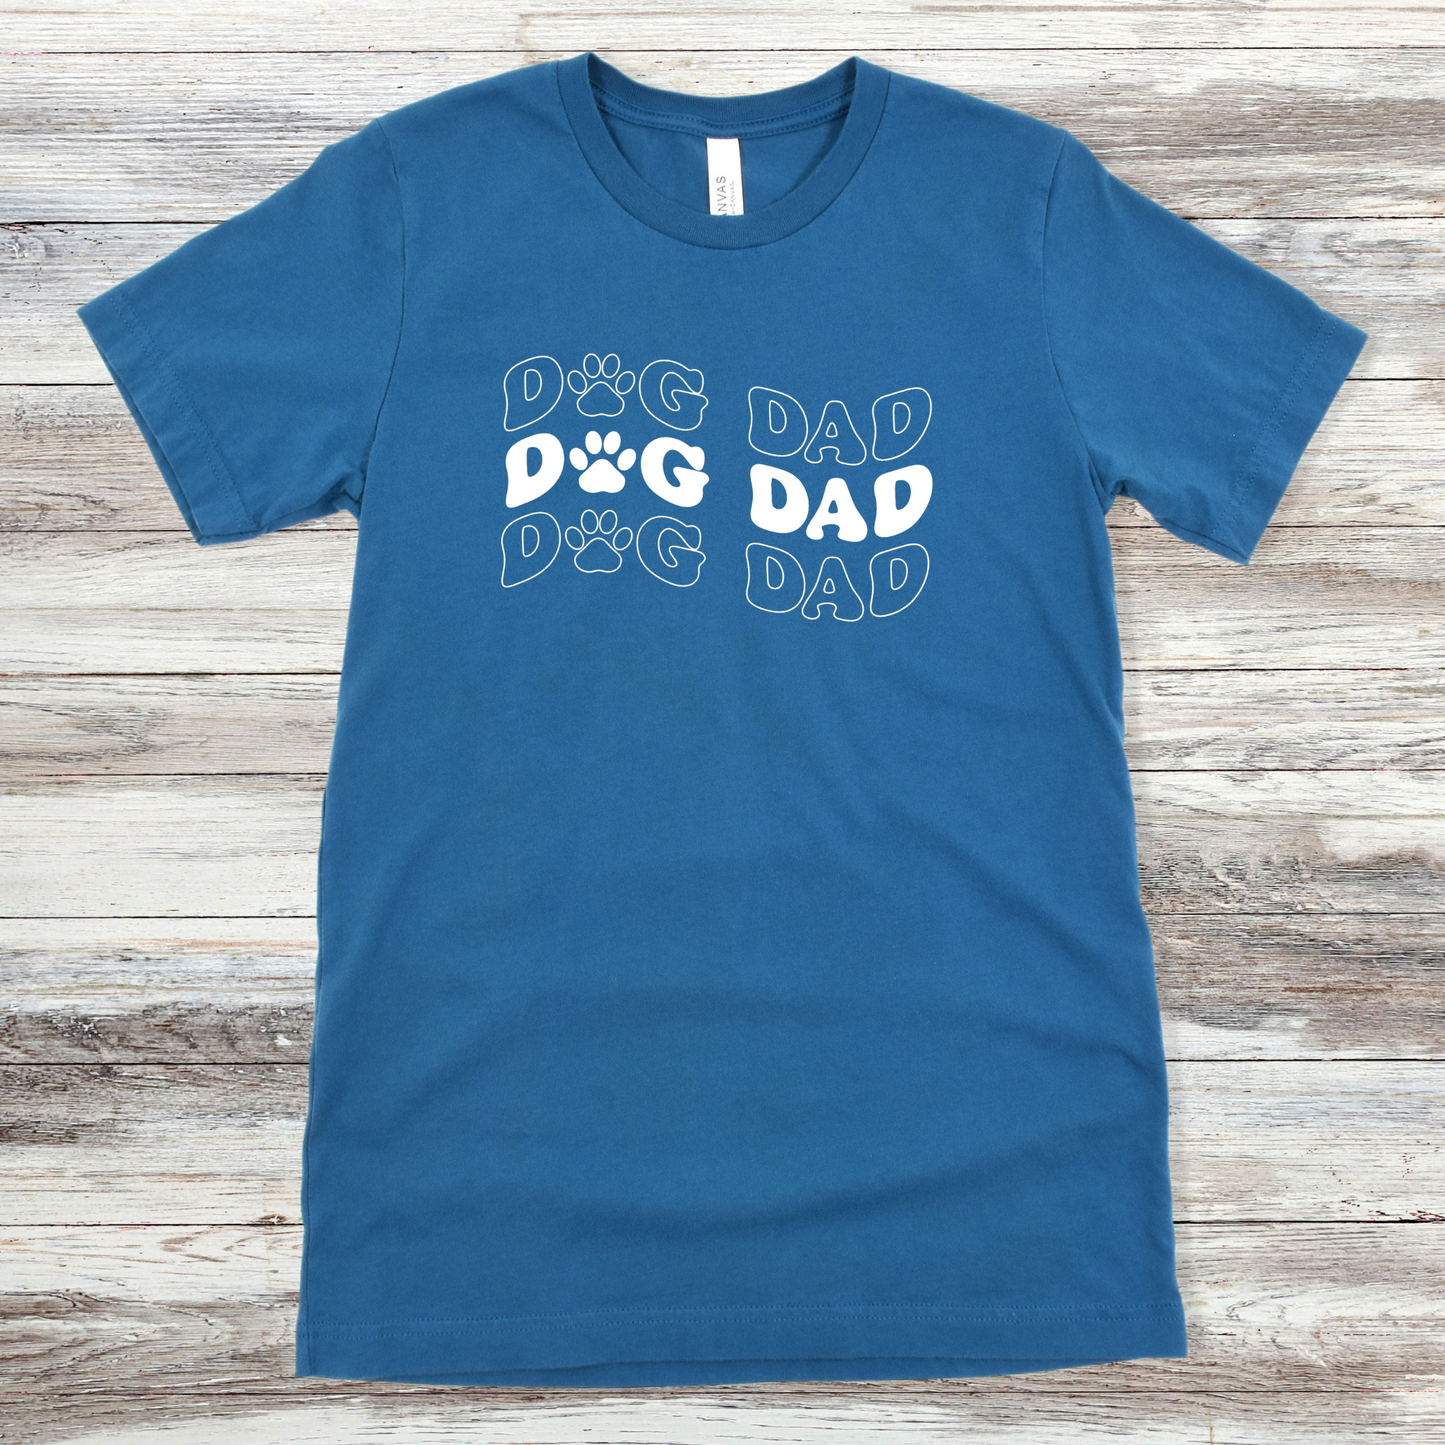 Text reading "Dog Dad" on a Deep Teal Tee